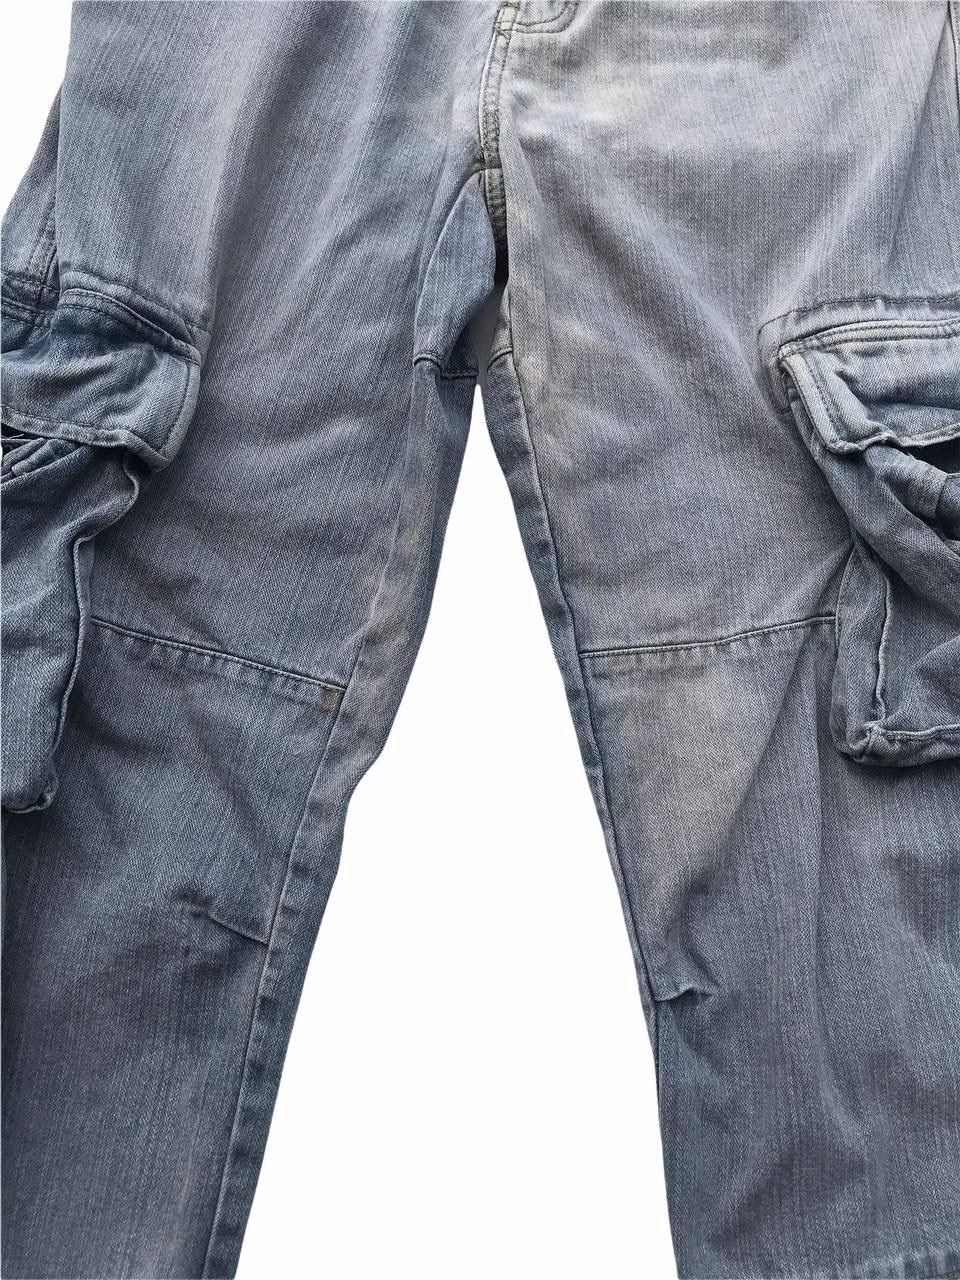 Gstar Gstar Denim Cargo Multipocket Streetwear Fashion Pants Size US 31 - 7 Thumbnail